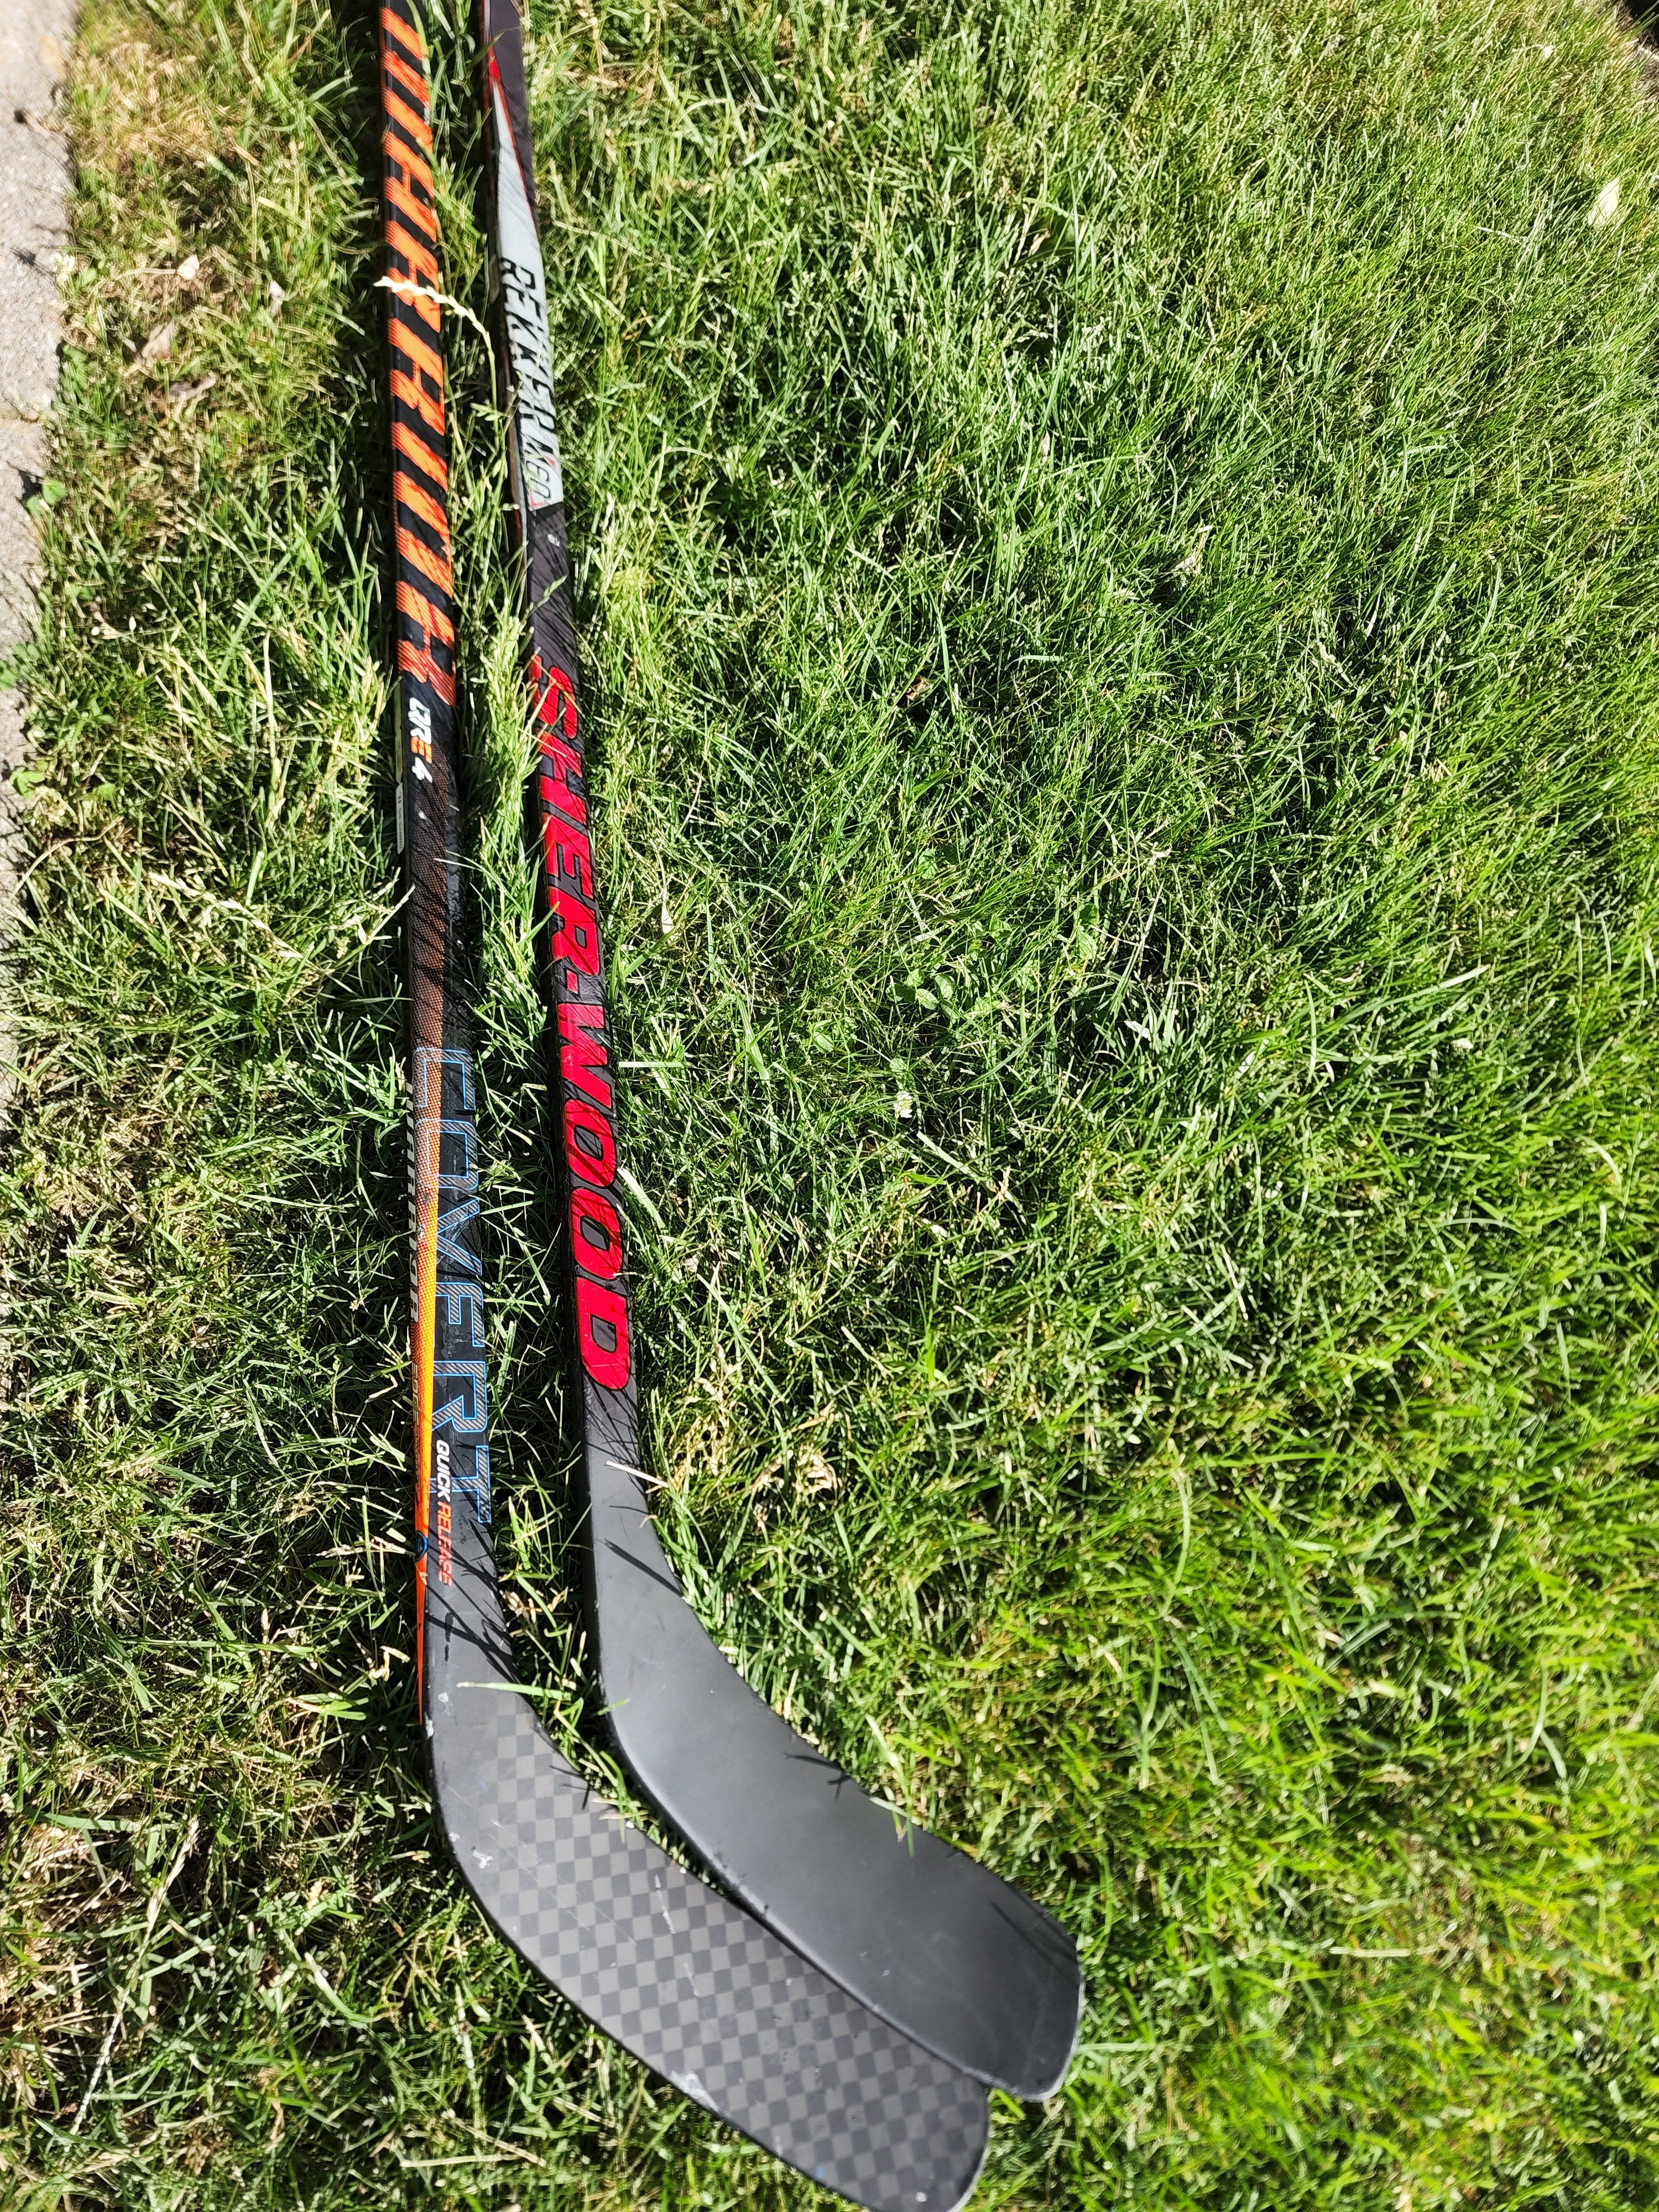 Details about   2 New Canadian Impulse senior composite hockey sticks left handed 